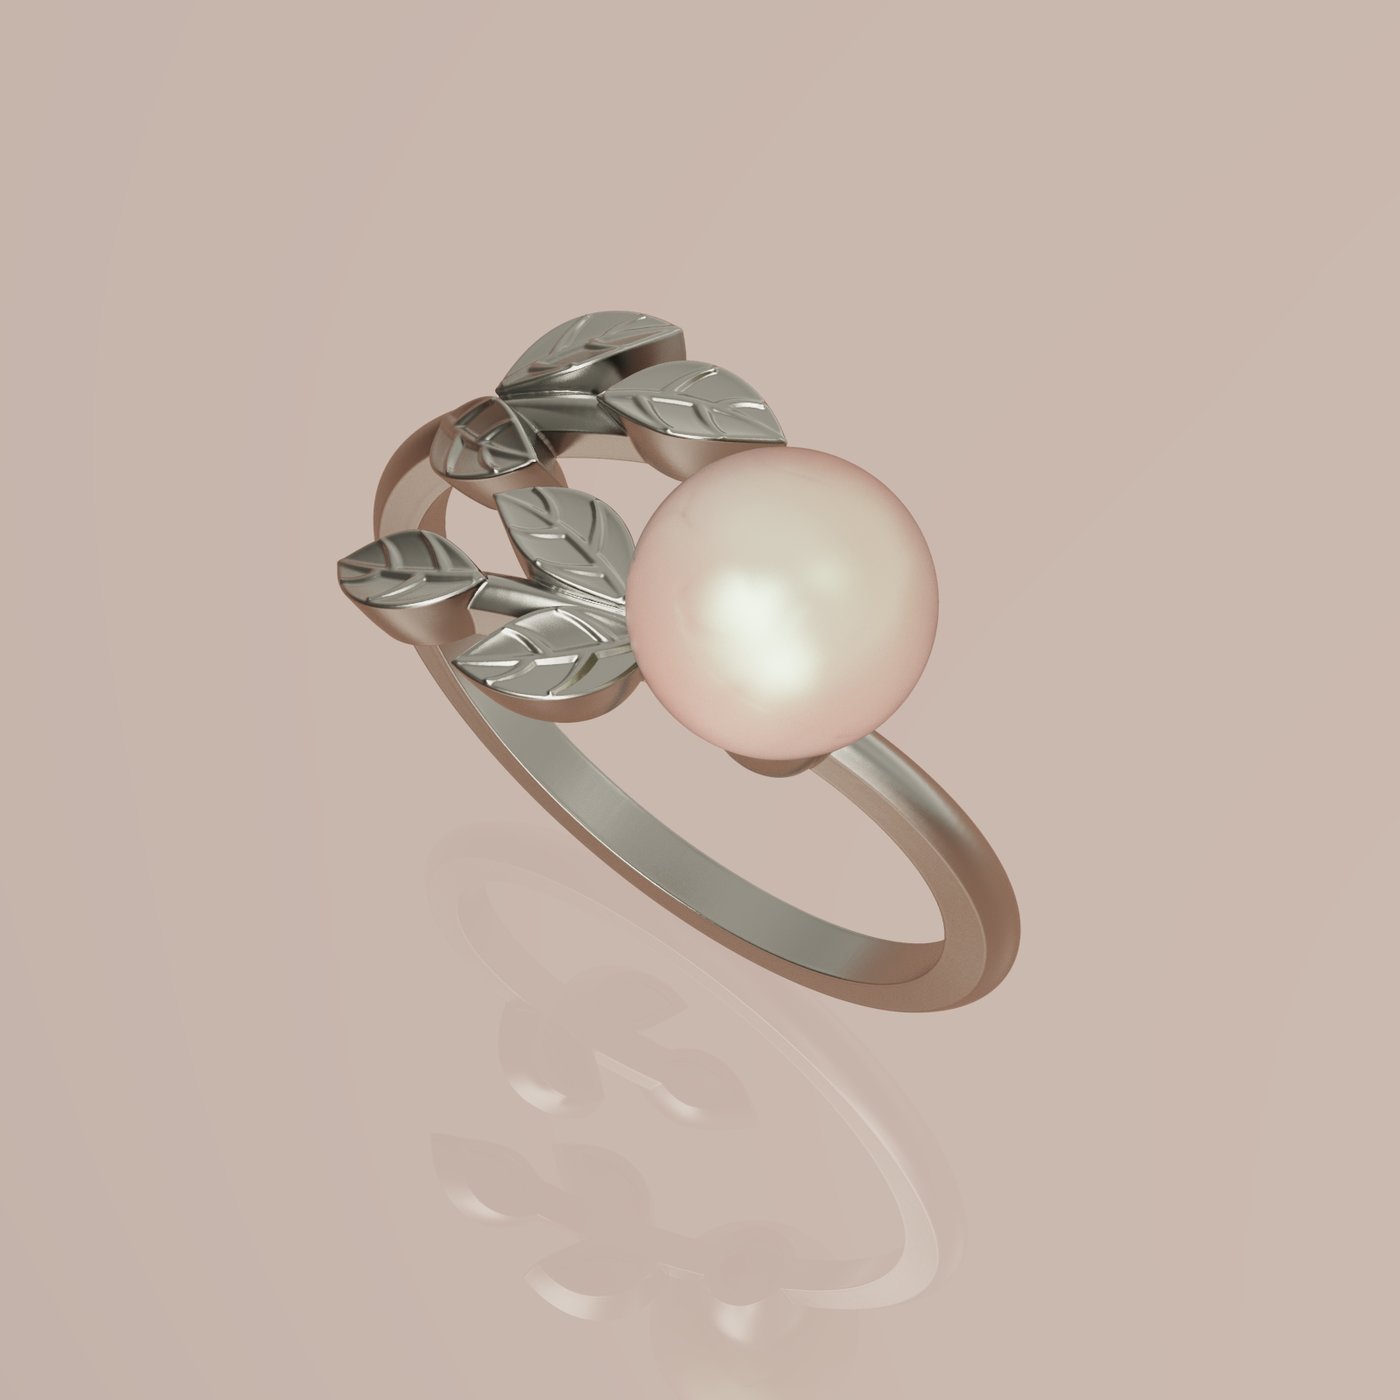 pearl ring